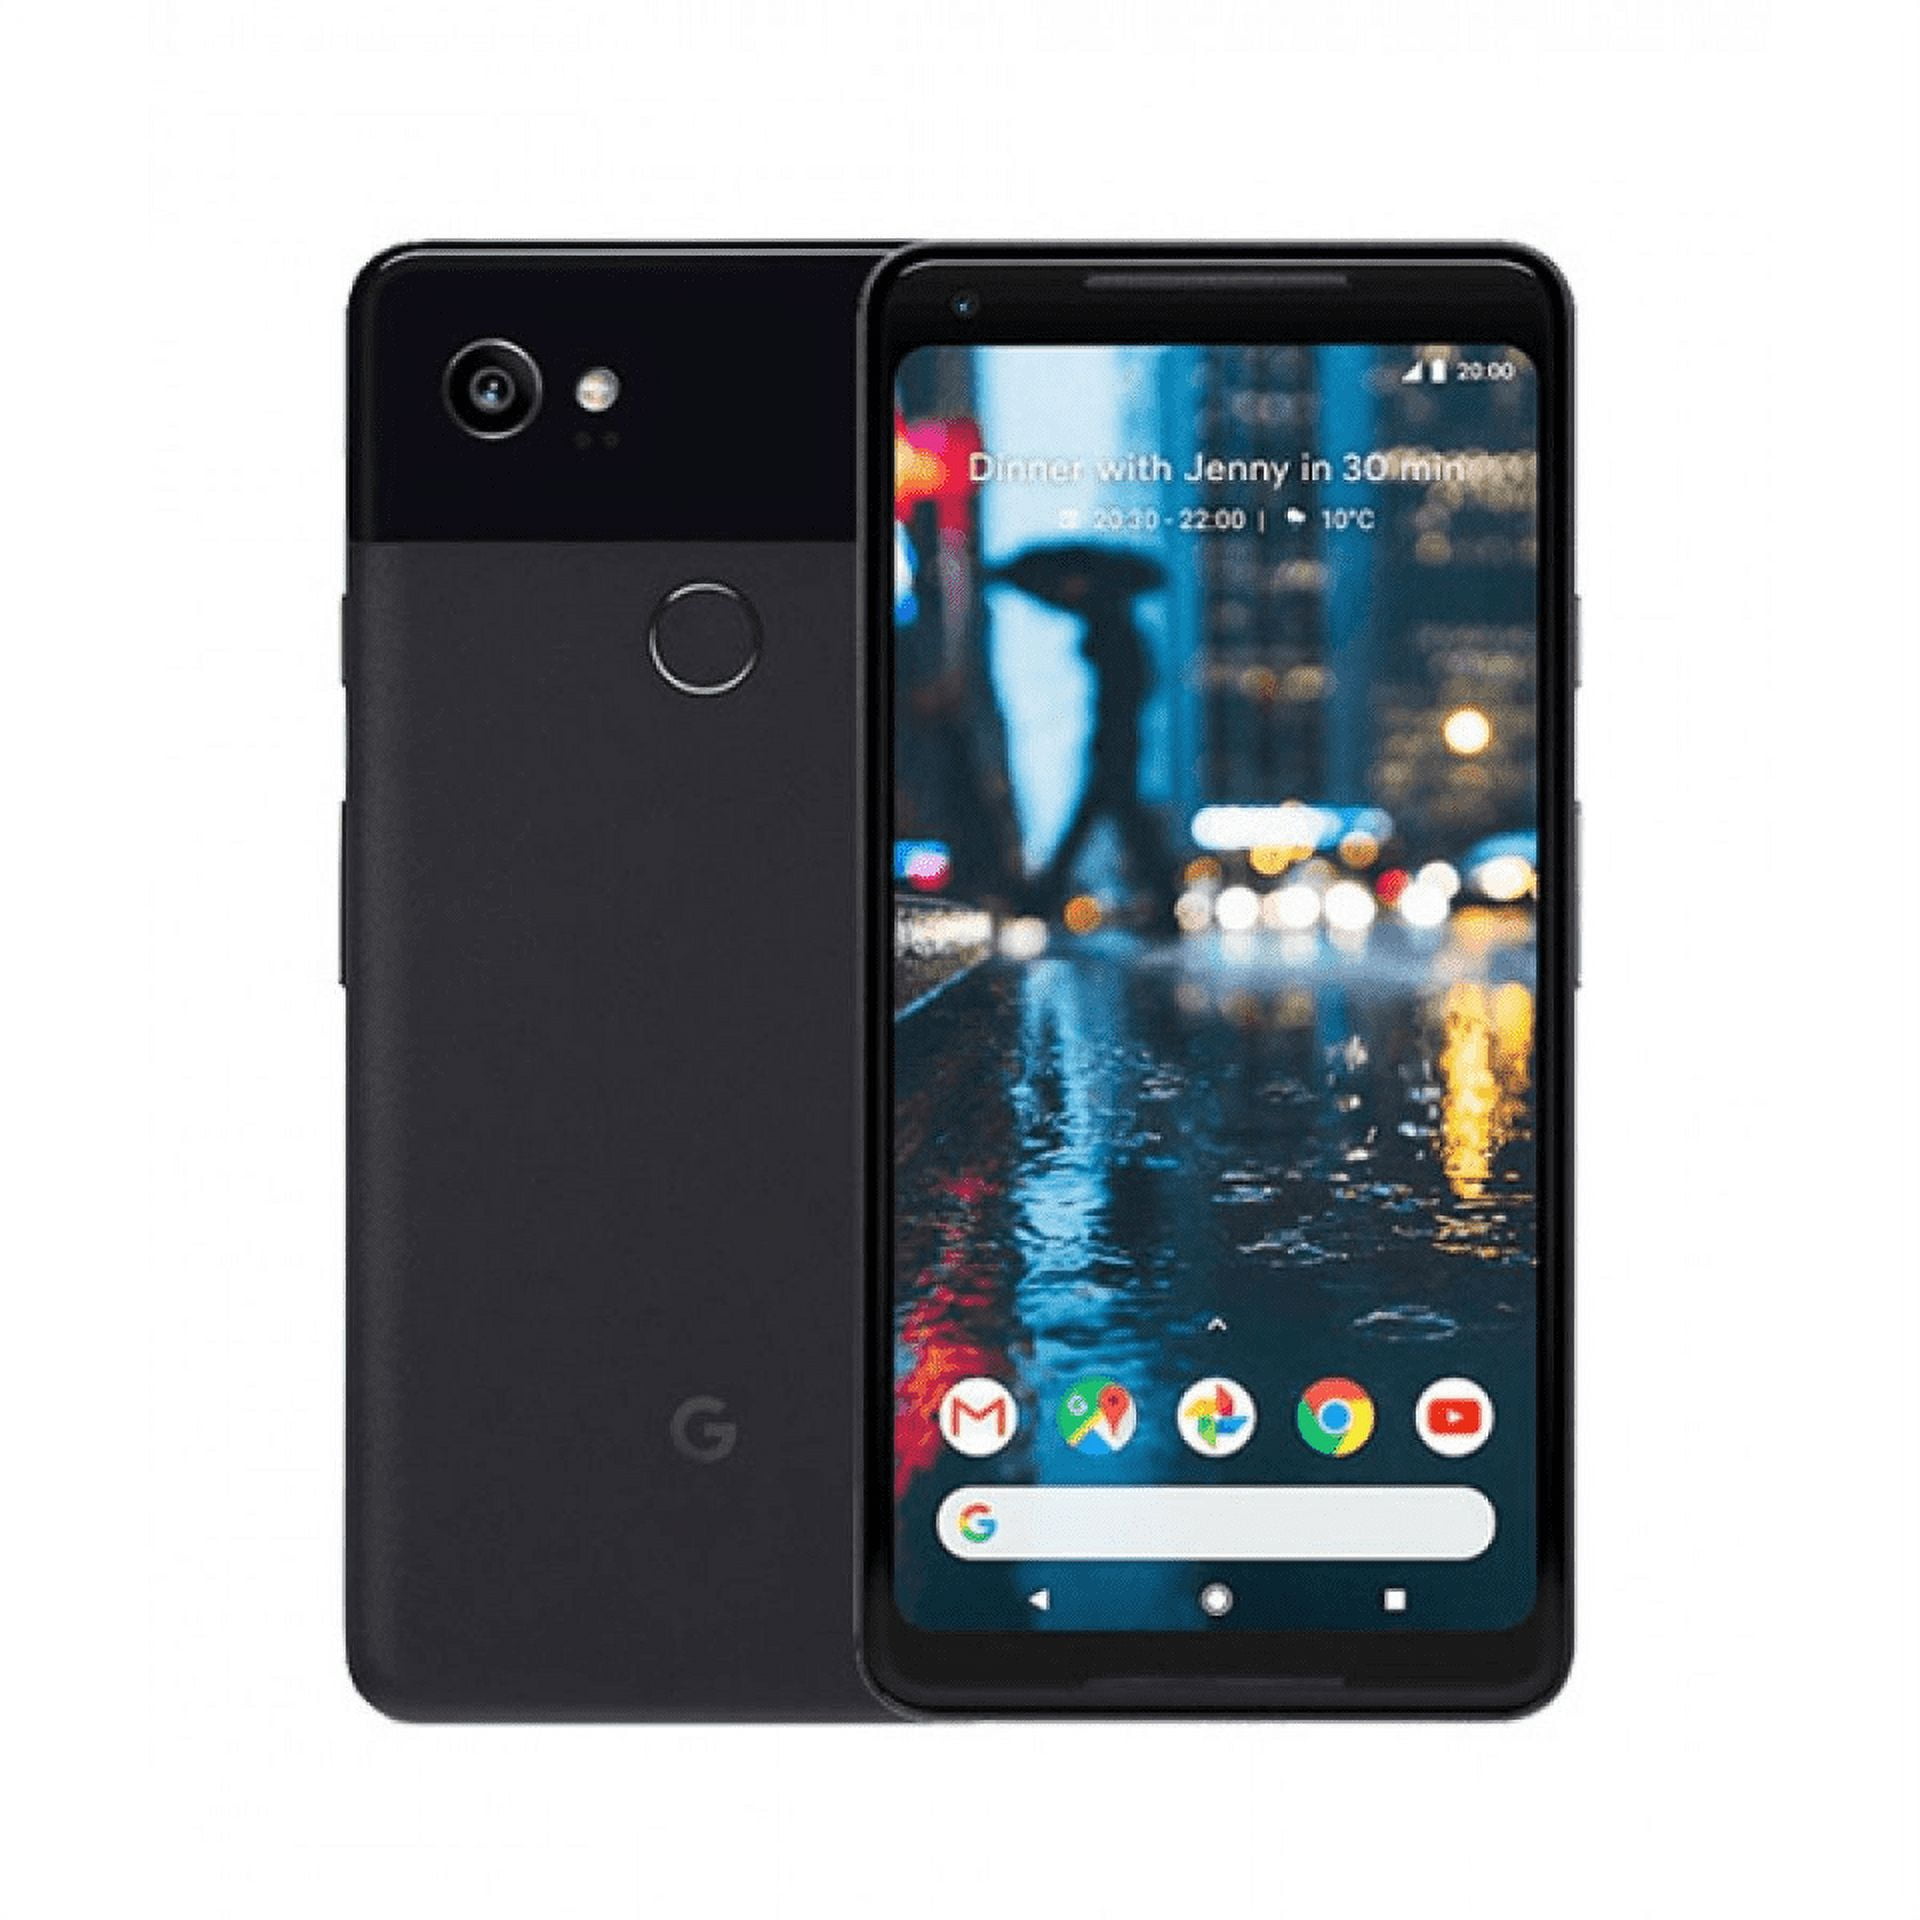 Reurbished Google Pixel 2 XL - 64GB - Black - Fully Unlocked -  VZW/T-Mobile/Global - Smartphone - Grade B (LCD Shadow)